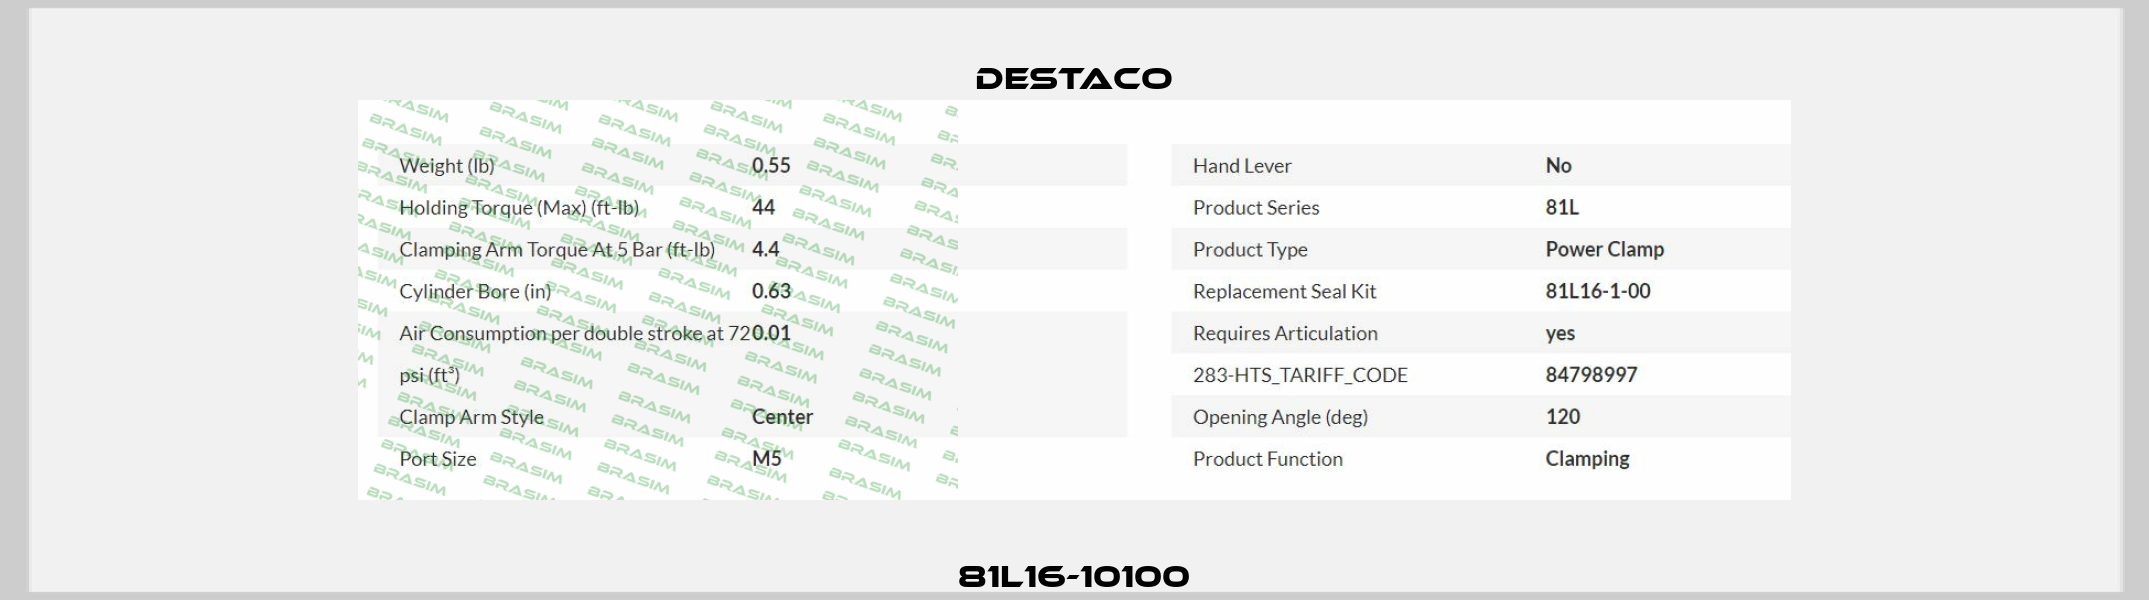 81L16-10100 Destaco